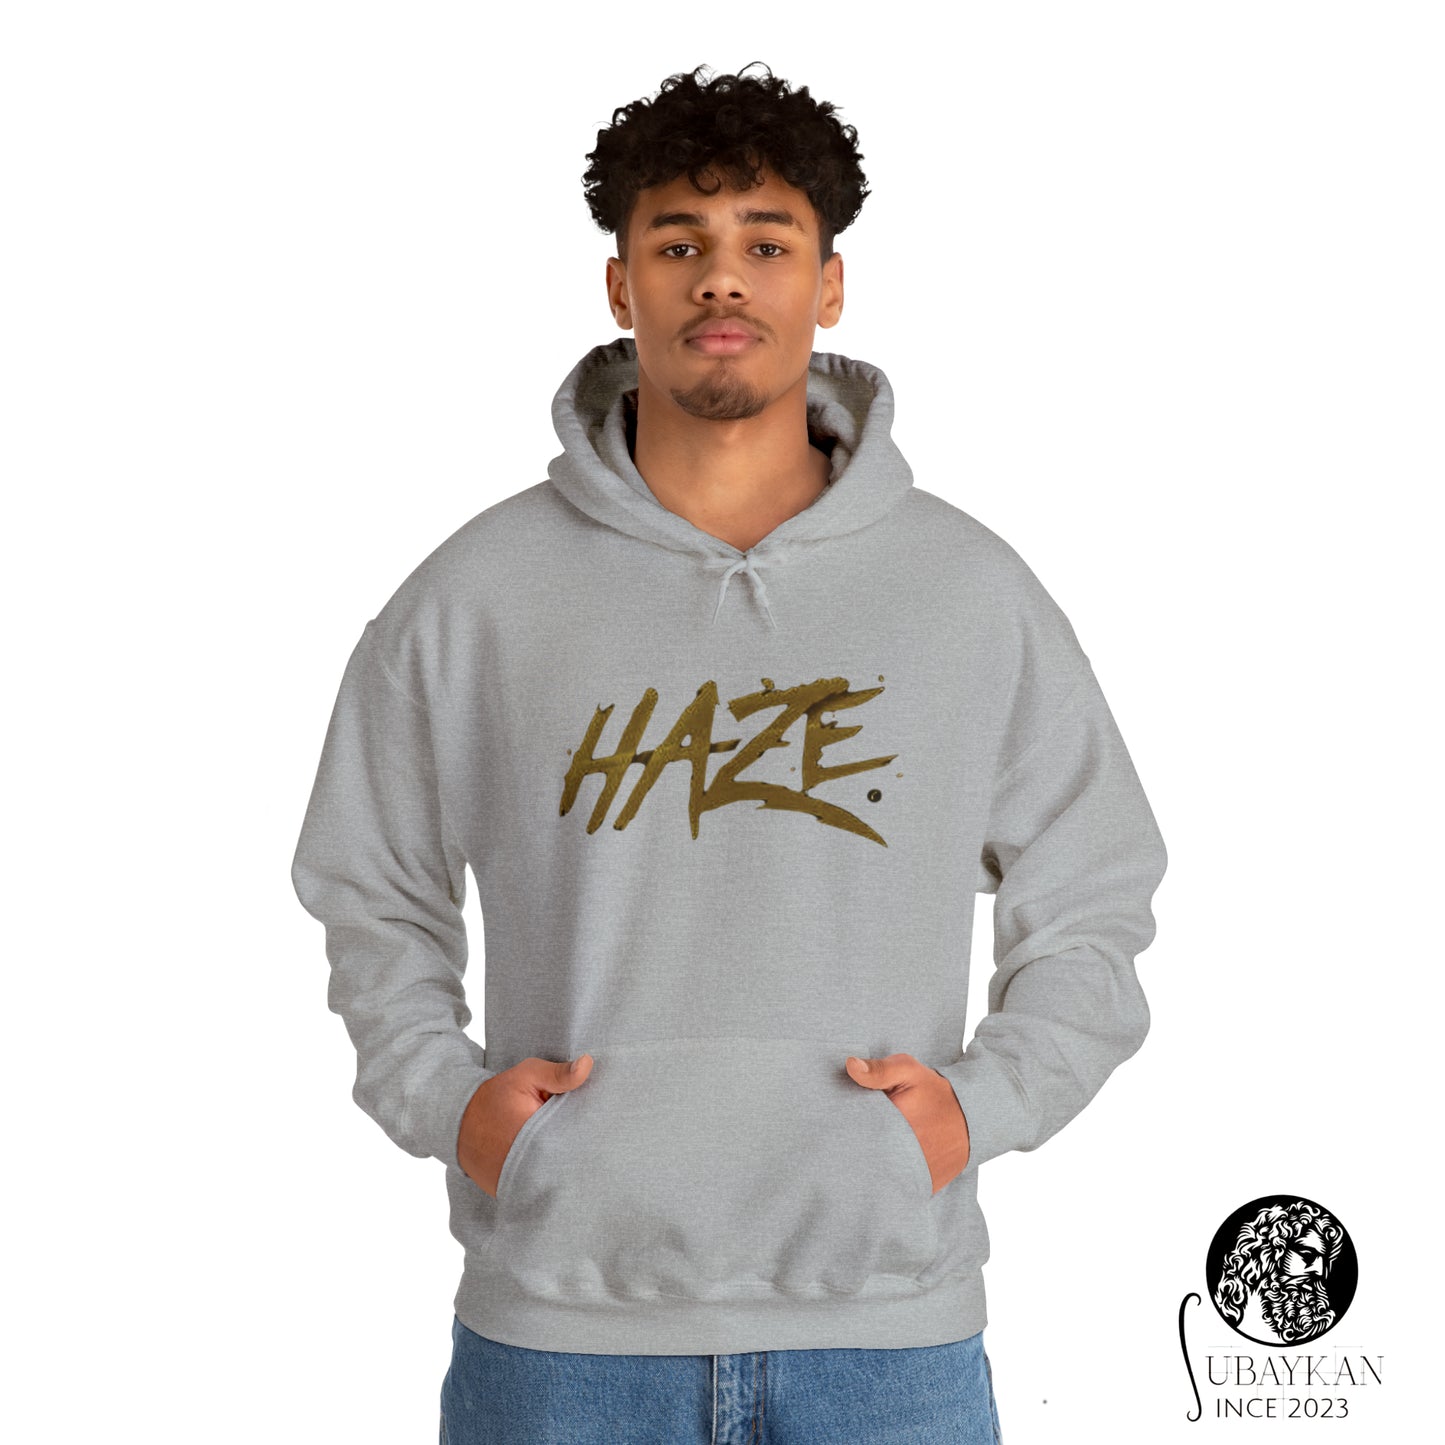 Haze Hoodie